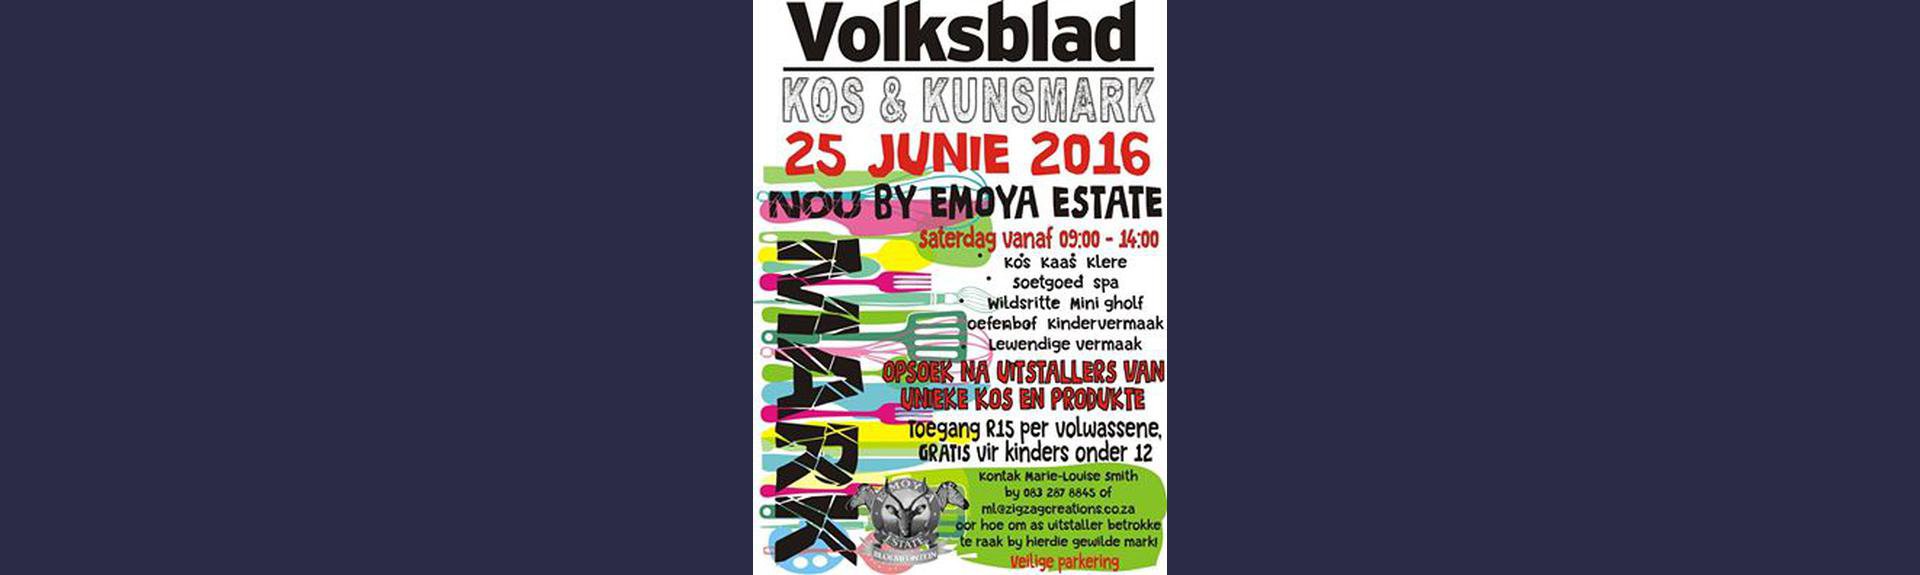 Volksblad Kos & Kunsmark by Emoya Estate